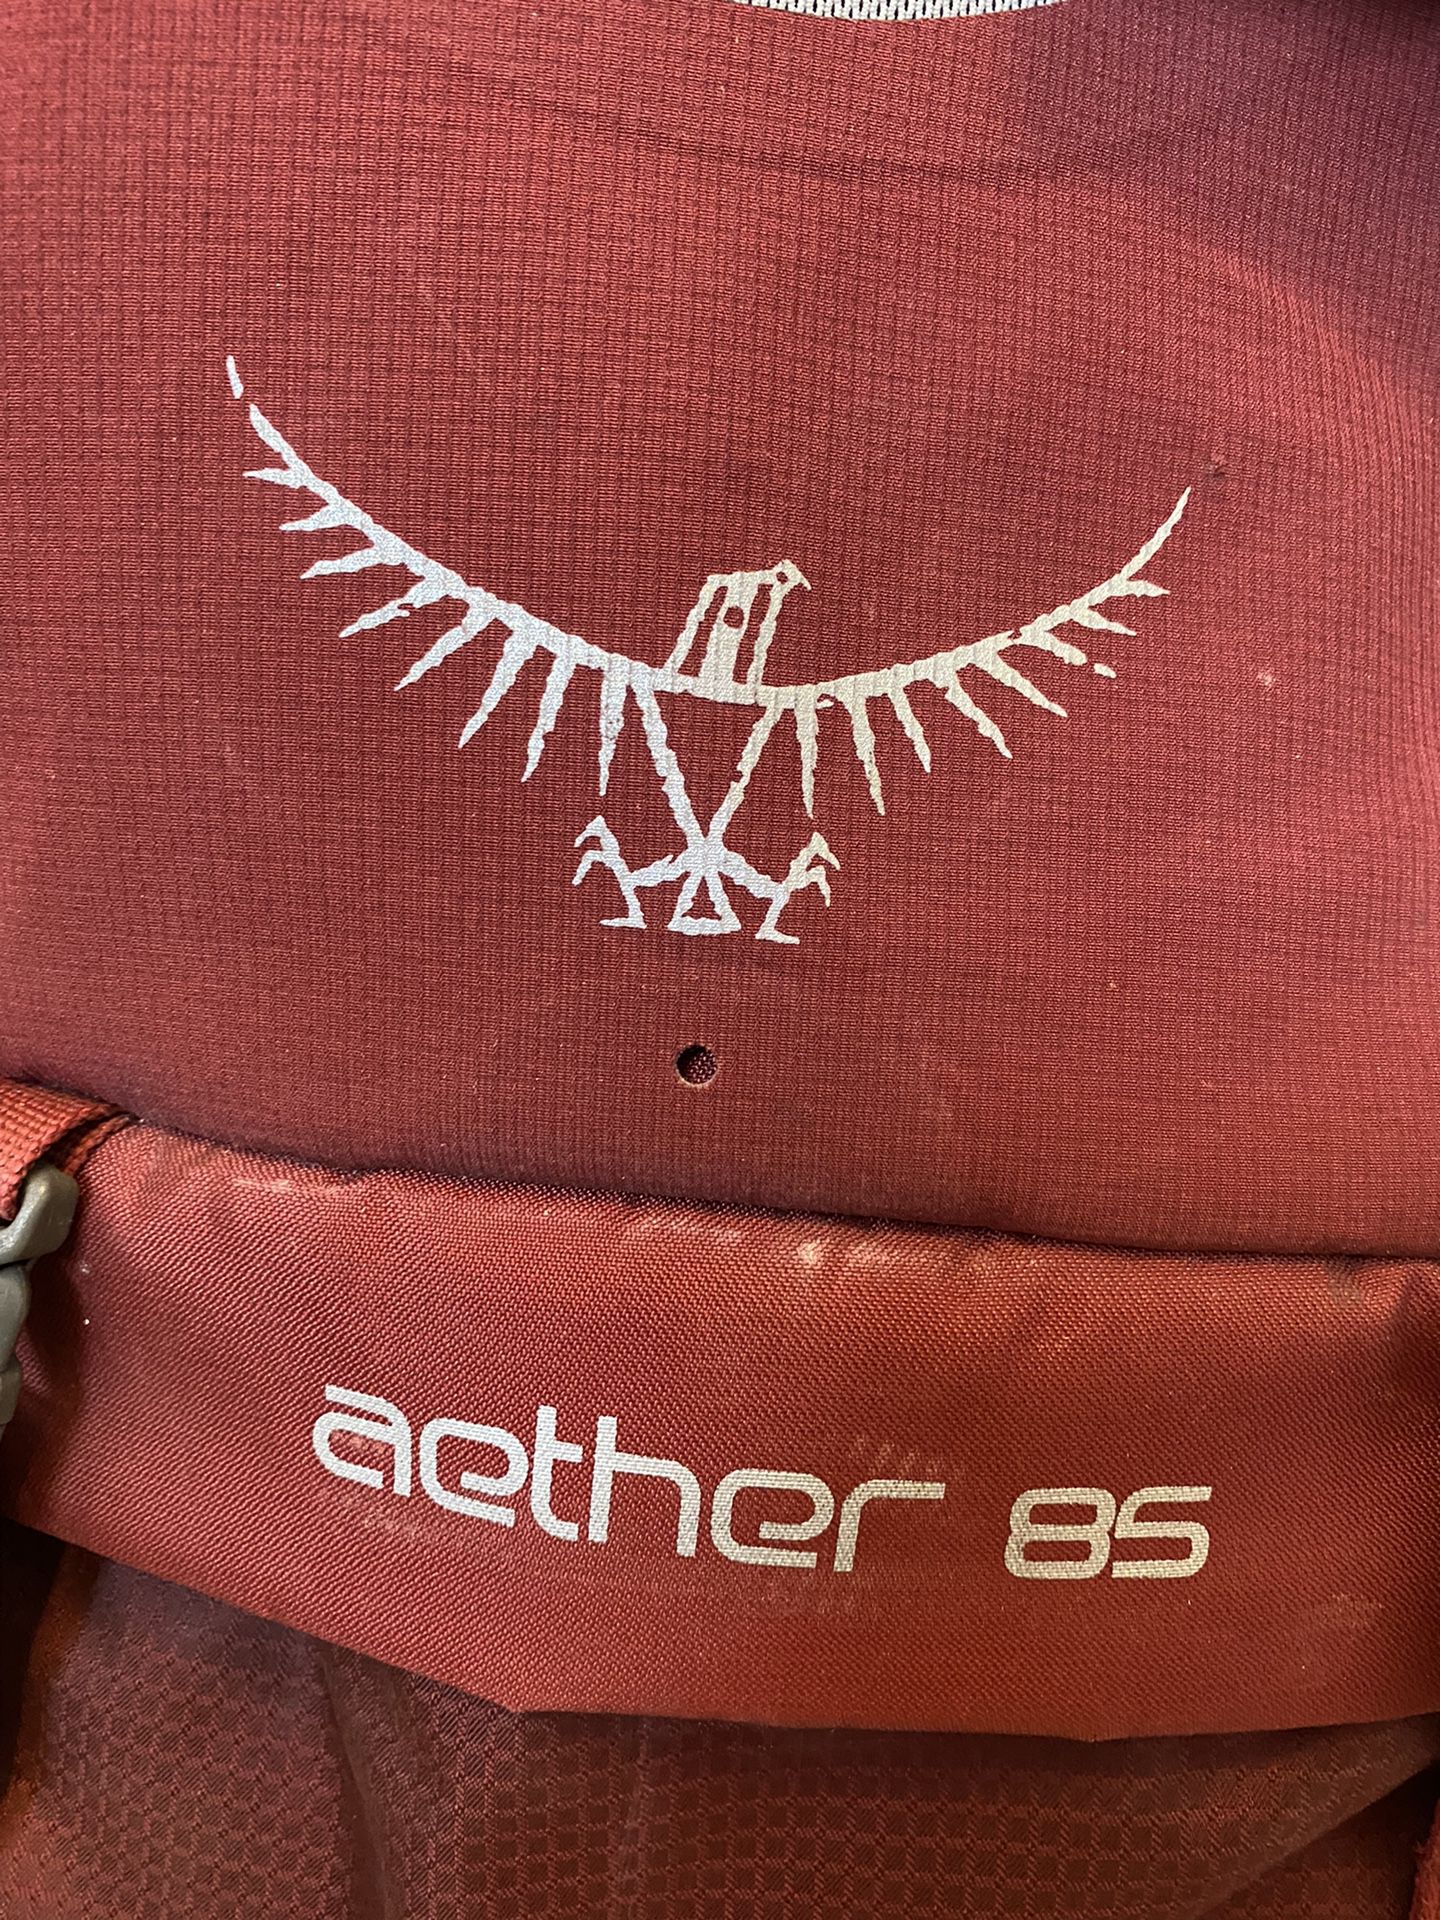 Osprey Aether 85 Hiking Backpack